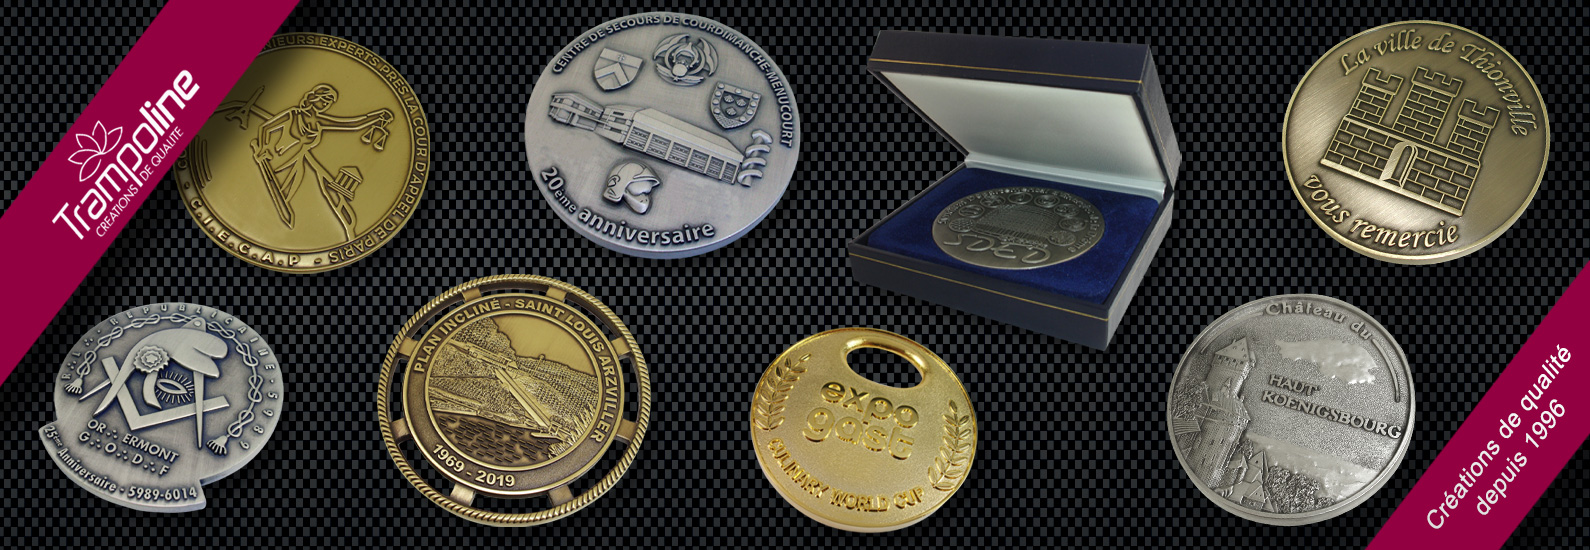 1  realisation medaille sur mesure entreprise logo bronze ecrin fabricant